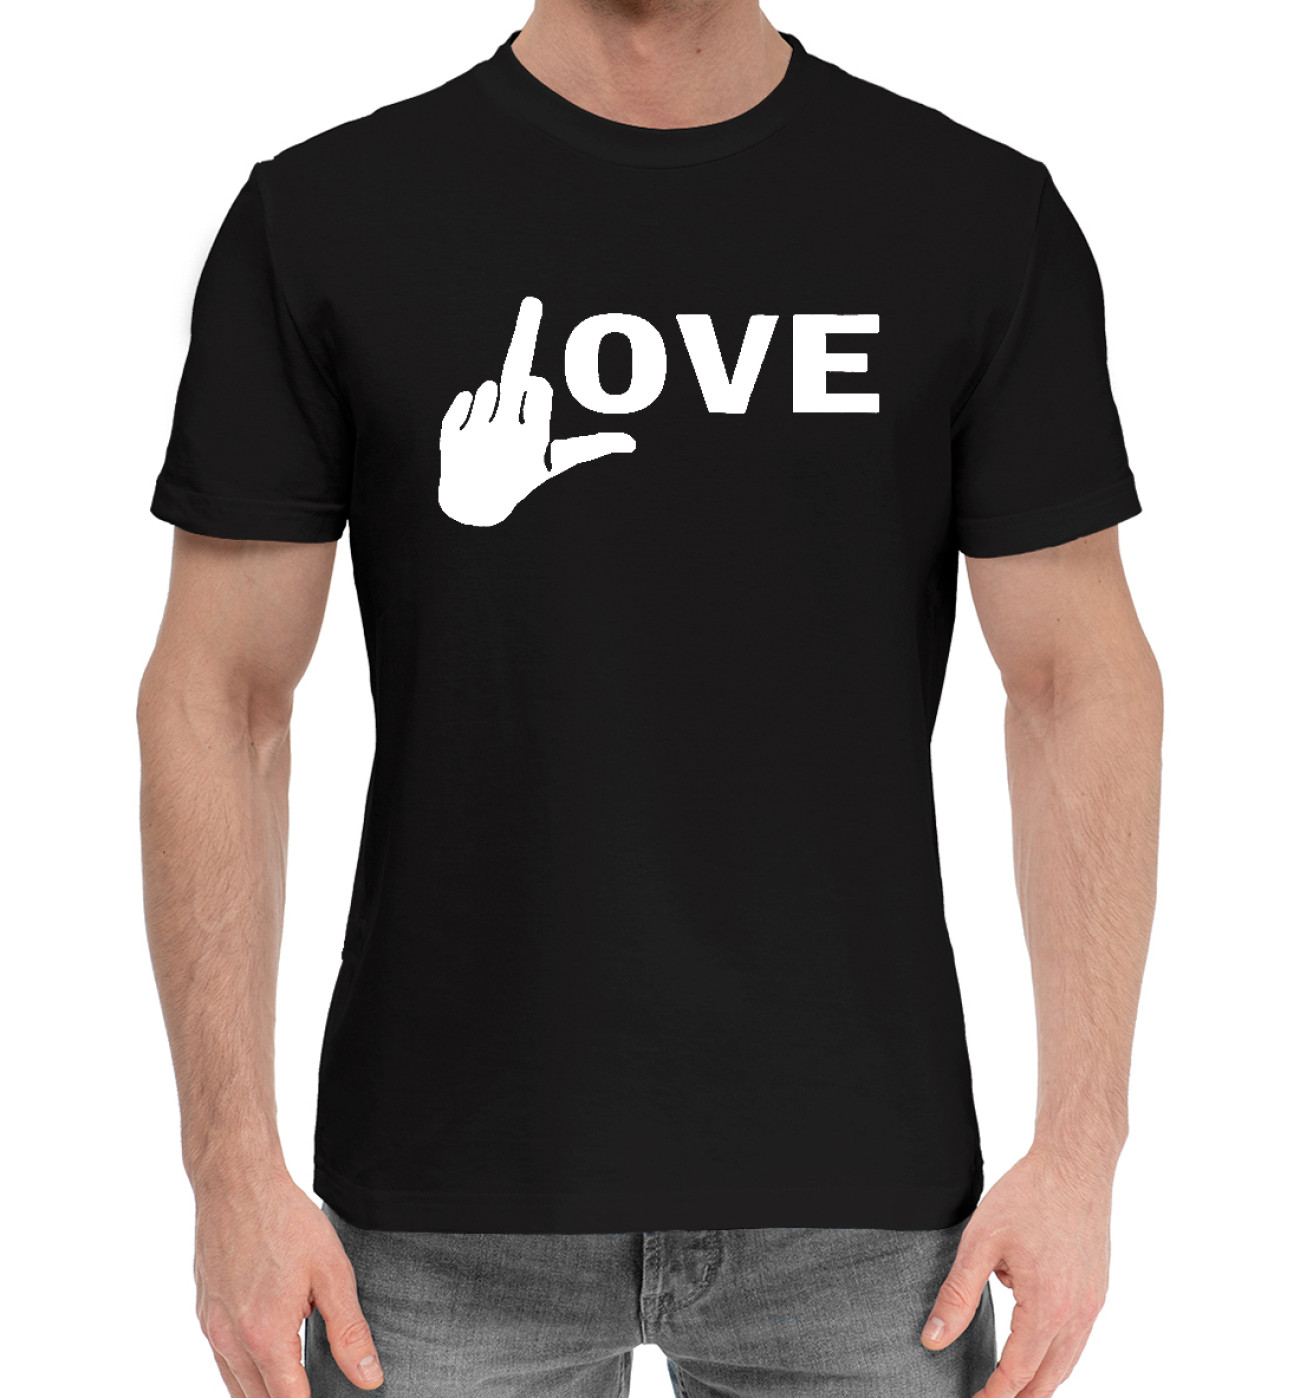 Мужская Хлопковая футболка Love (fuck), артикул: NDP-890146-hfu-2